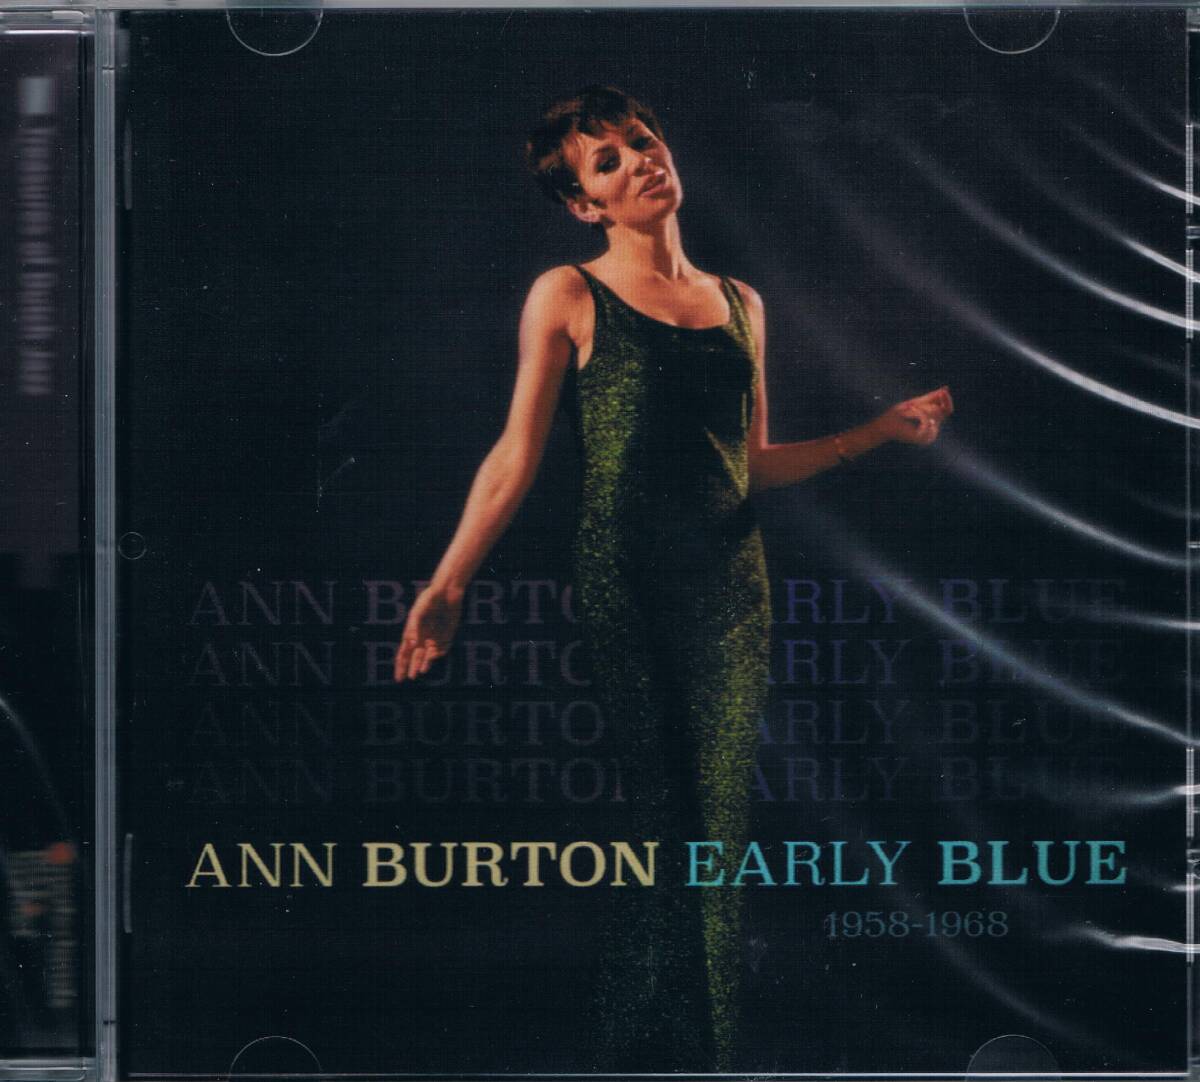  ultimate departure . sound source * Anne * Barton Ann Burton/Early Blue 1958-1968